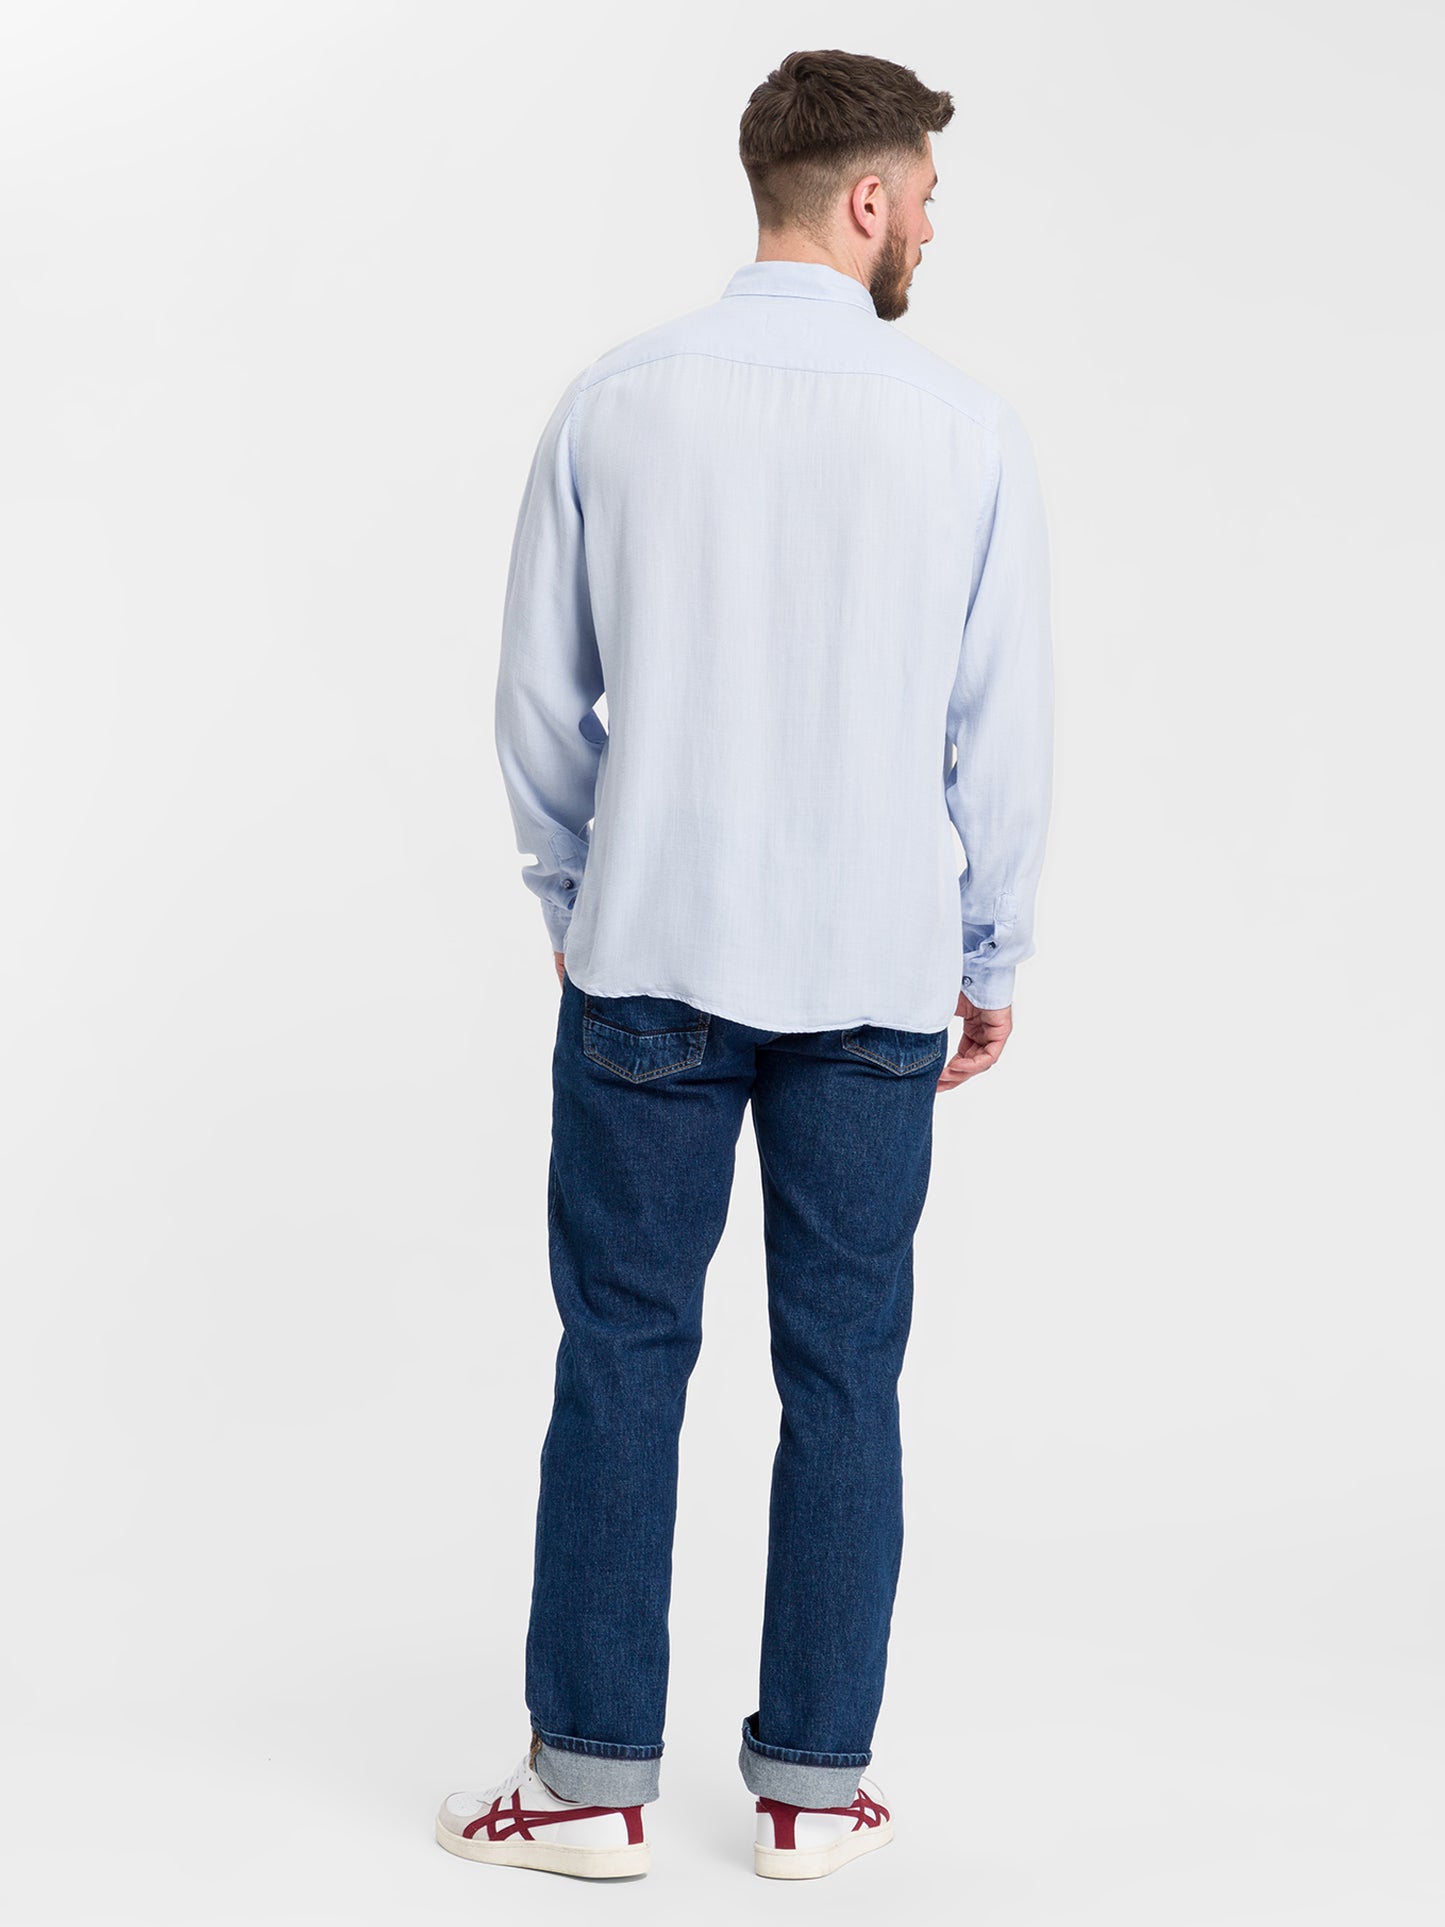 Men's regular long-sleeved shirt light blue with a patterned collar